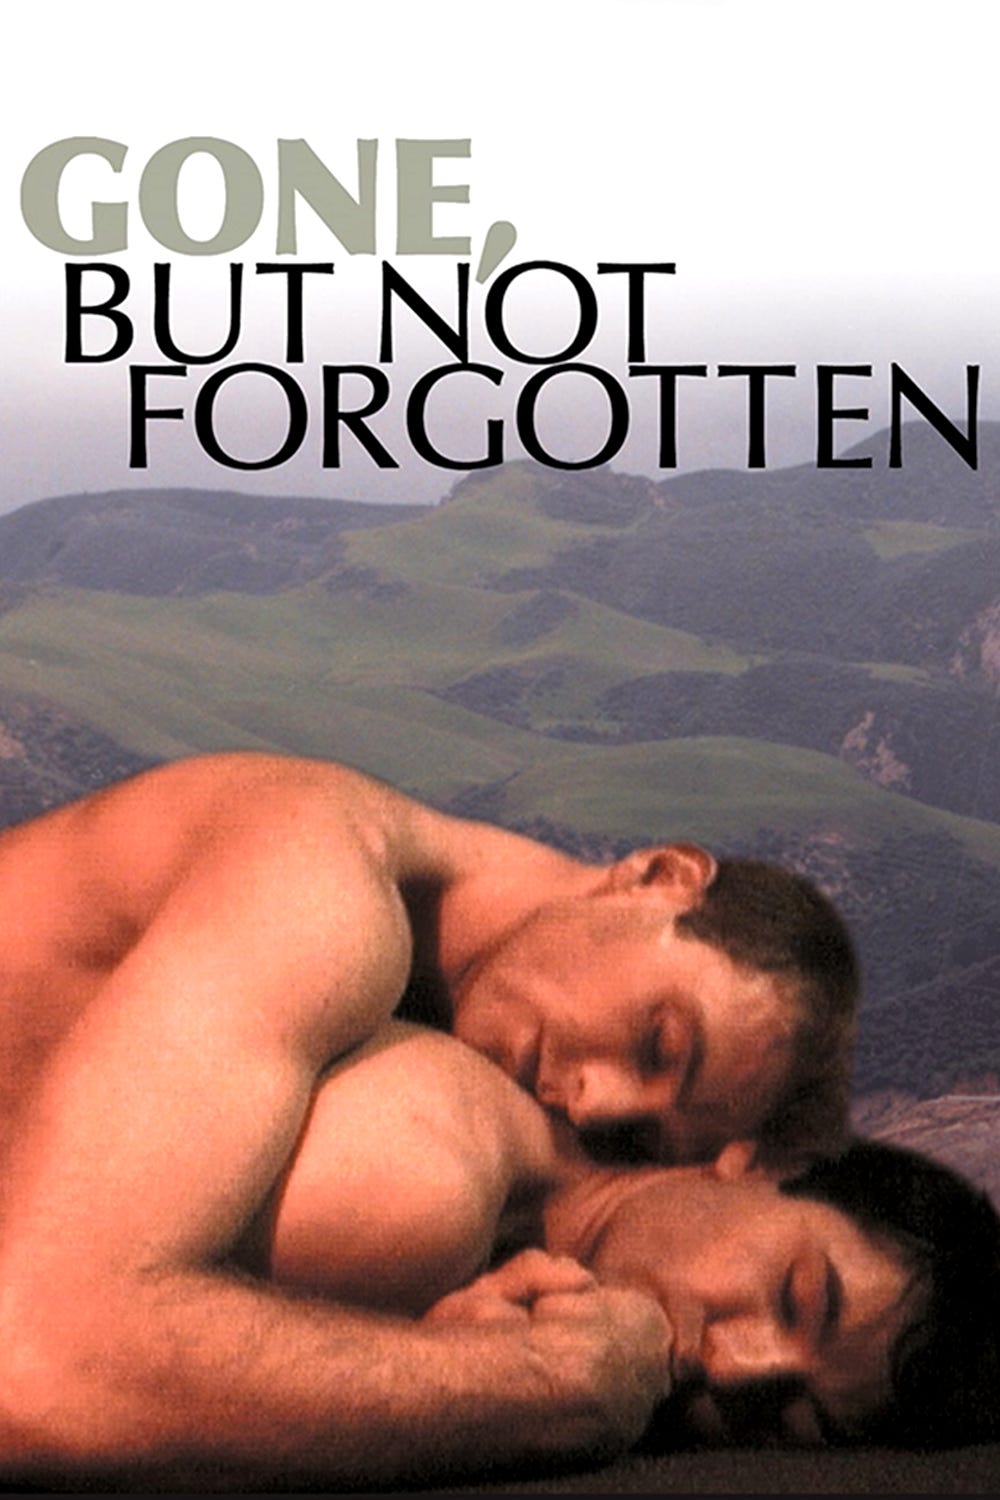 Gone but not forgotten [Sub-ITA] (2003)